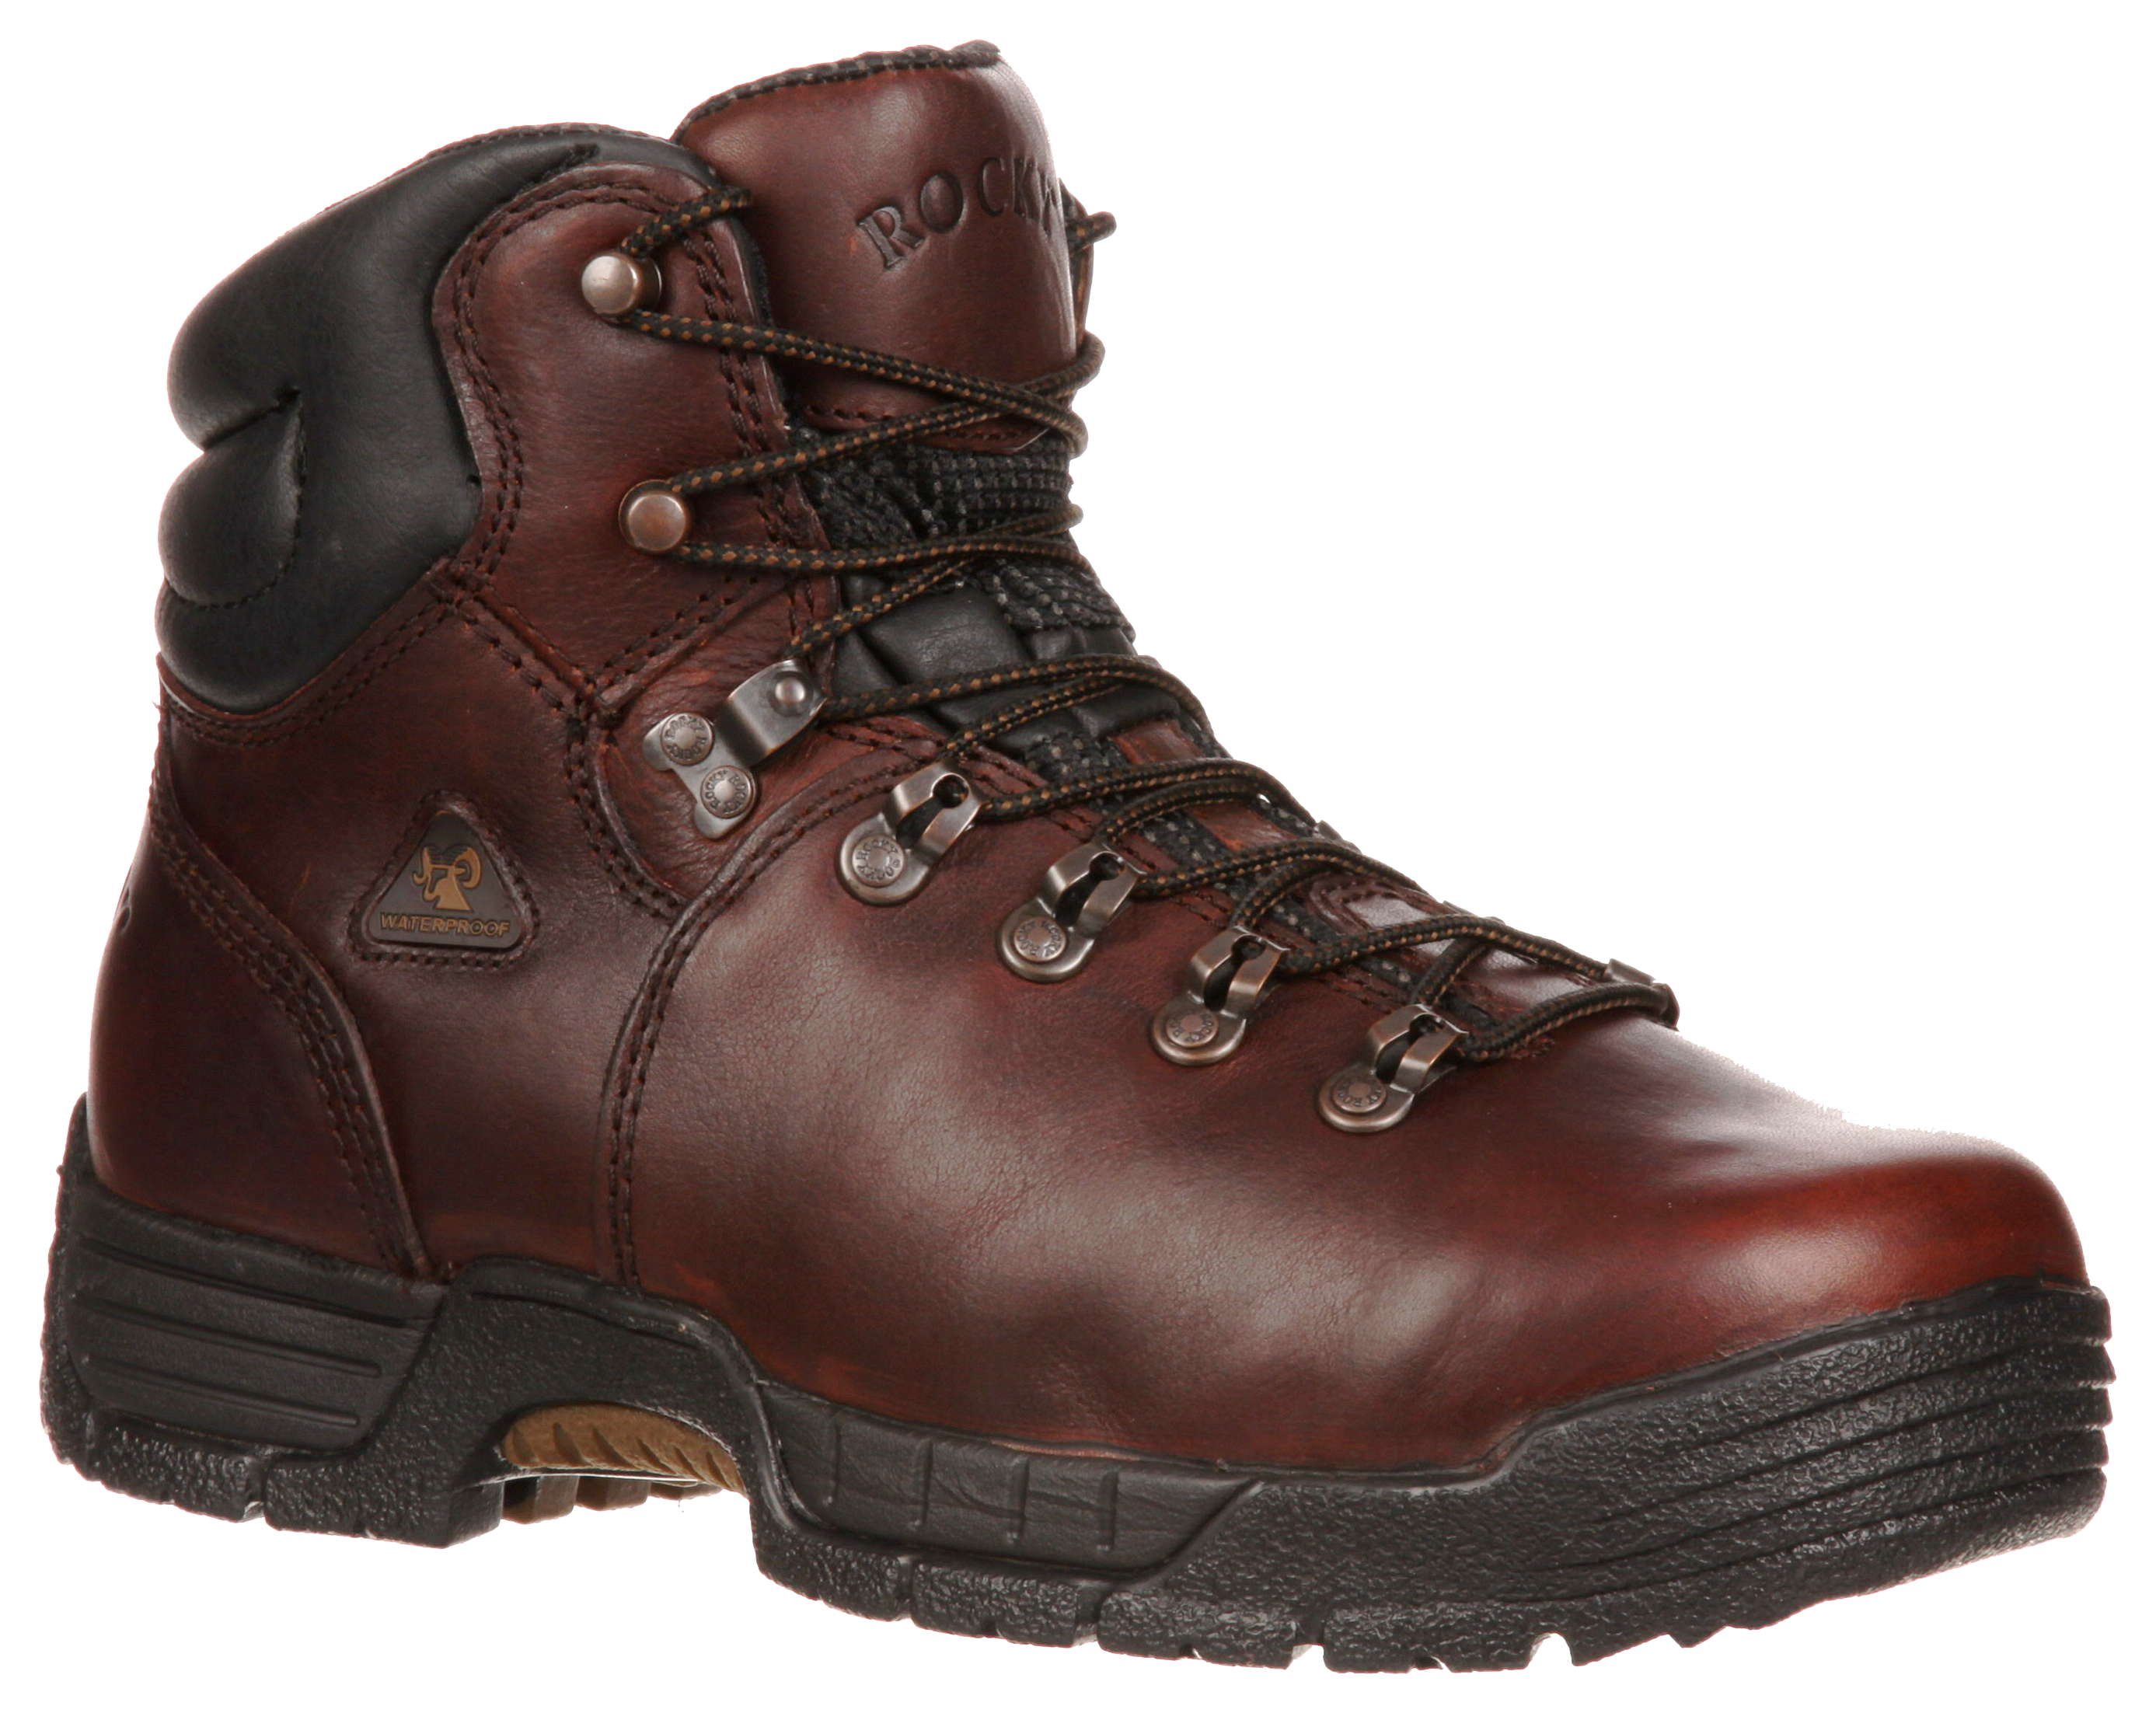 ROCKY MobiLite Waterproof Steel Toe Work Boots for Men - Brown - 14 W